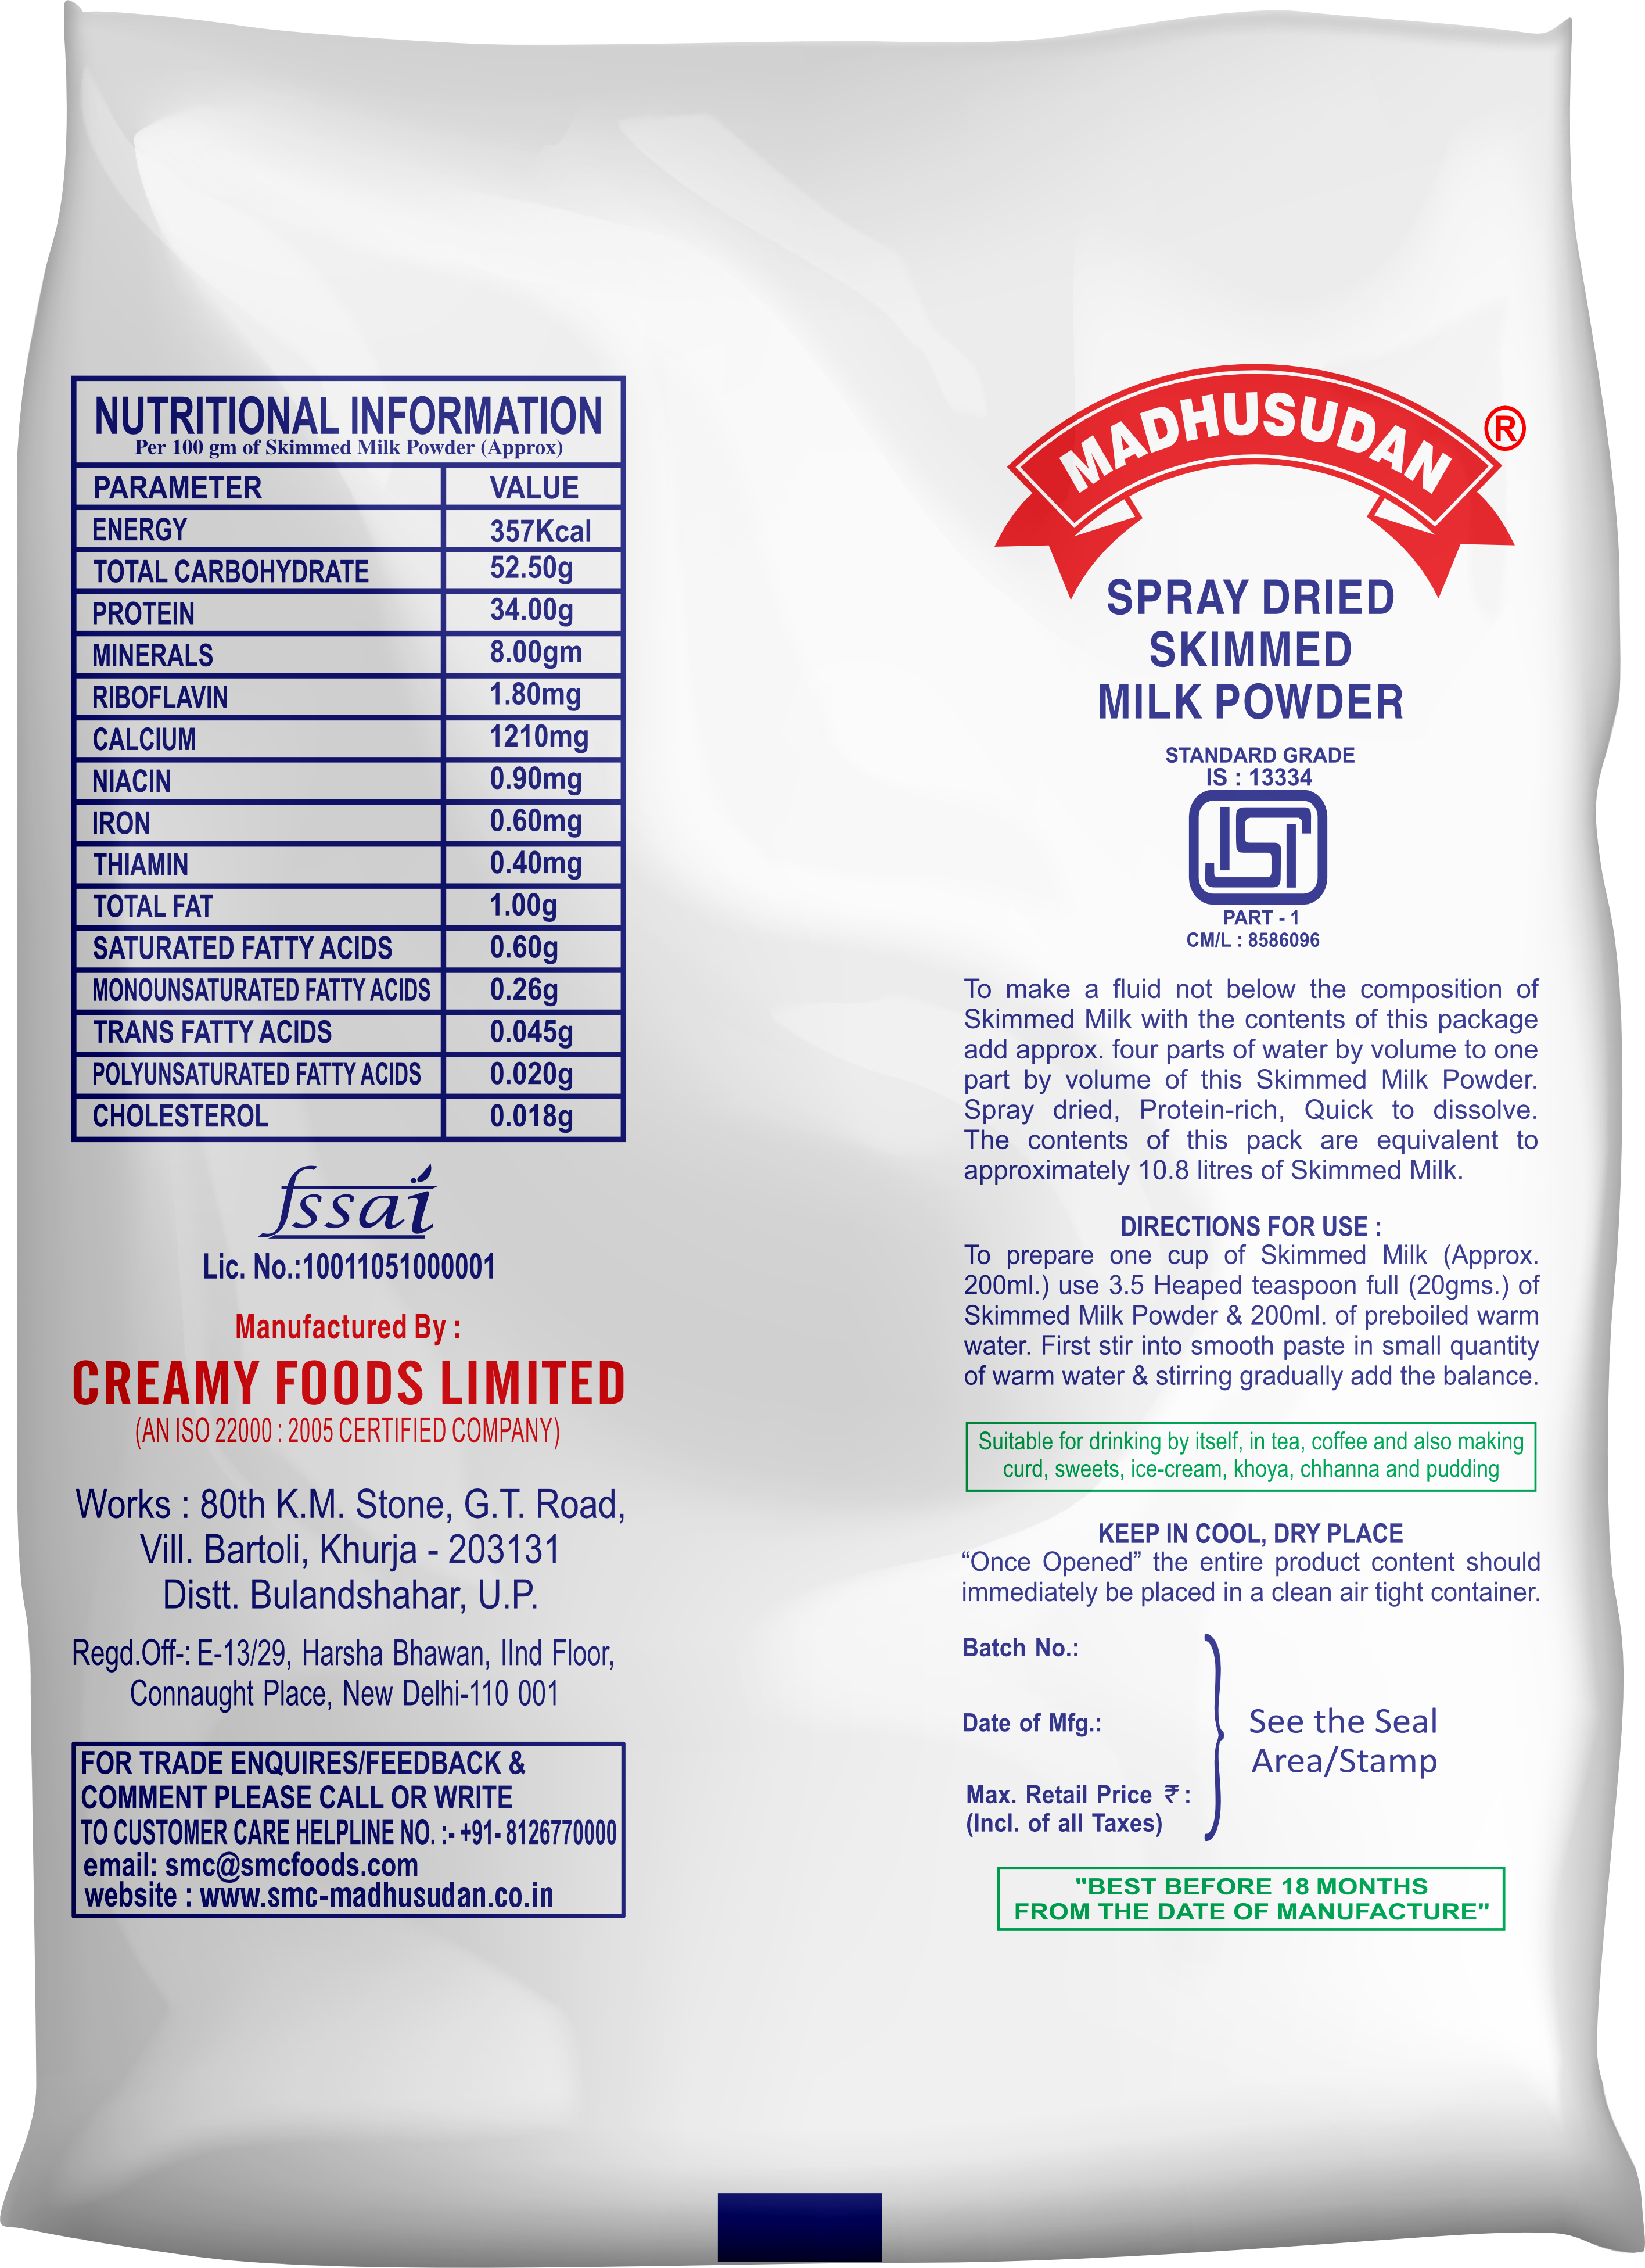 Madhusudan Skimmed Milk Powder 1 kg Pack